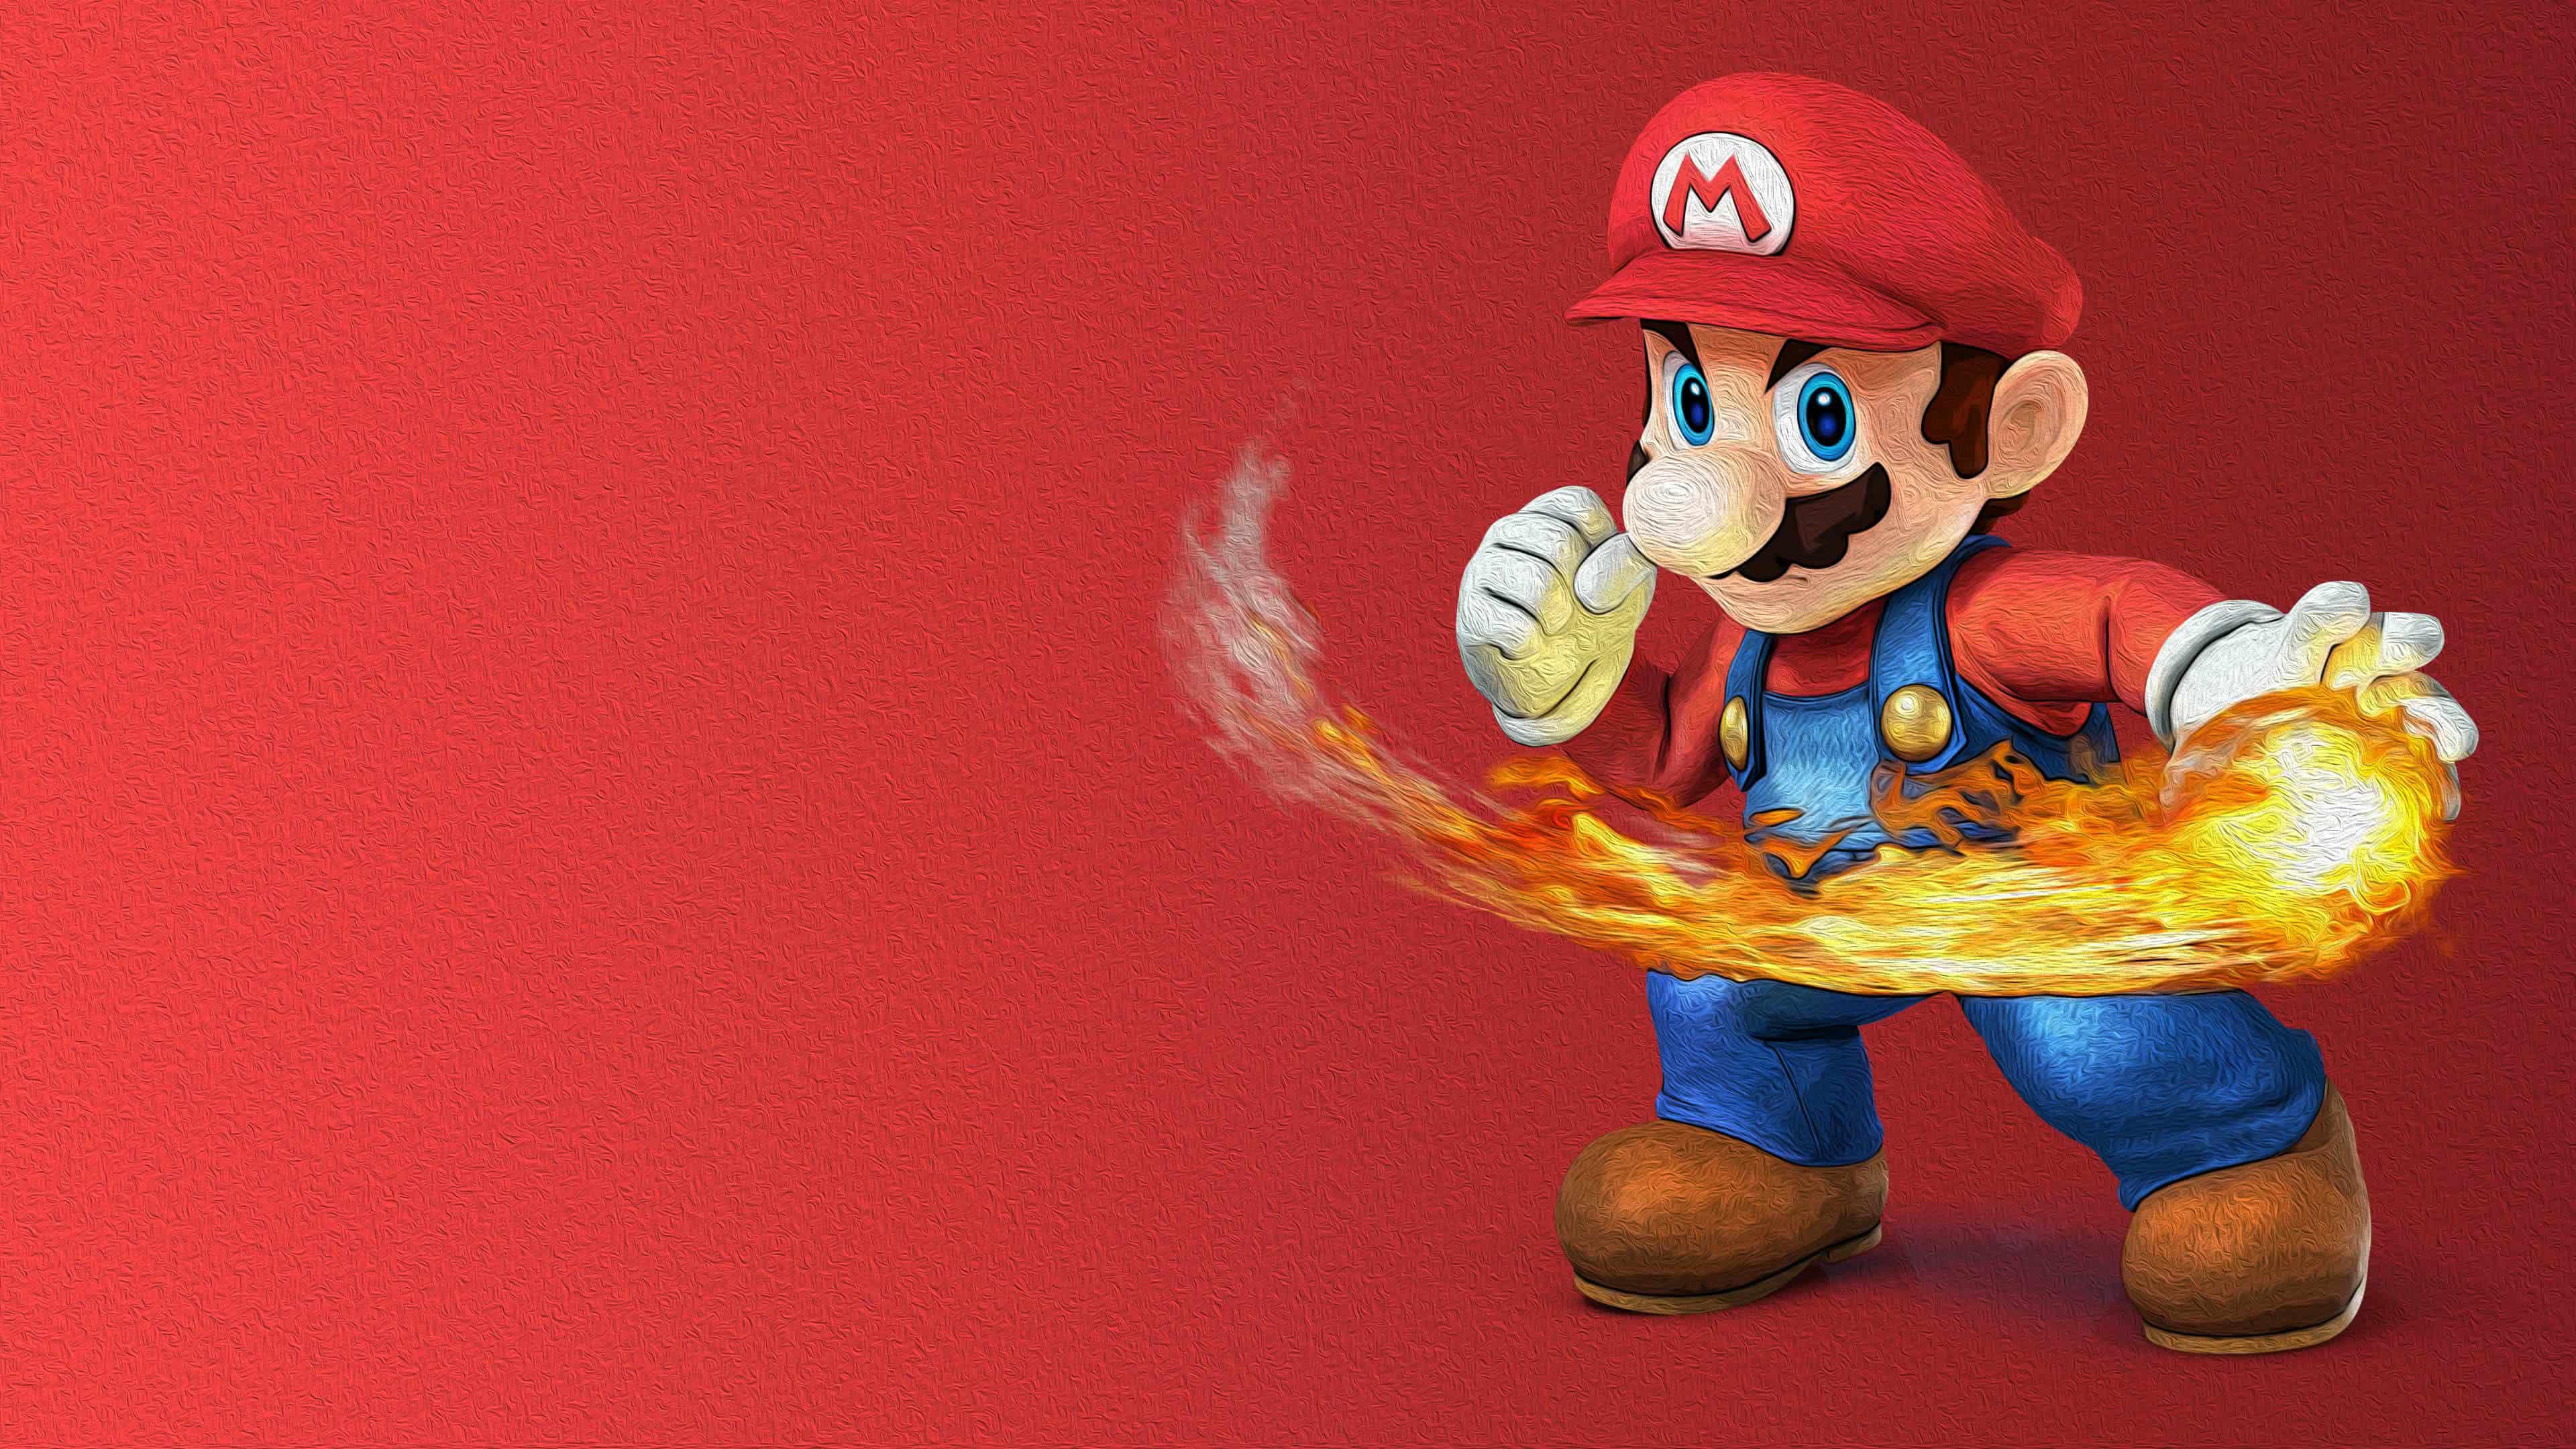 Super Smash Bros Mario UHD 4K fondo de pantalla | PIxelz